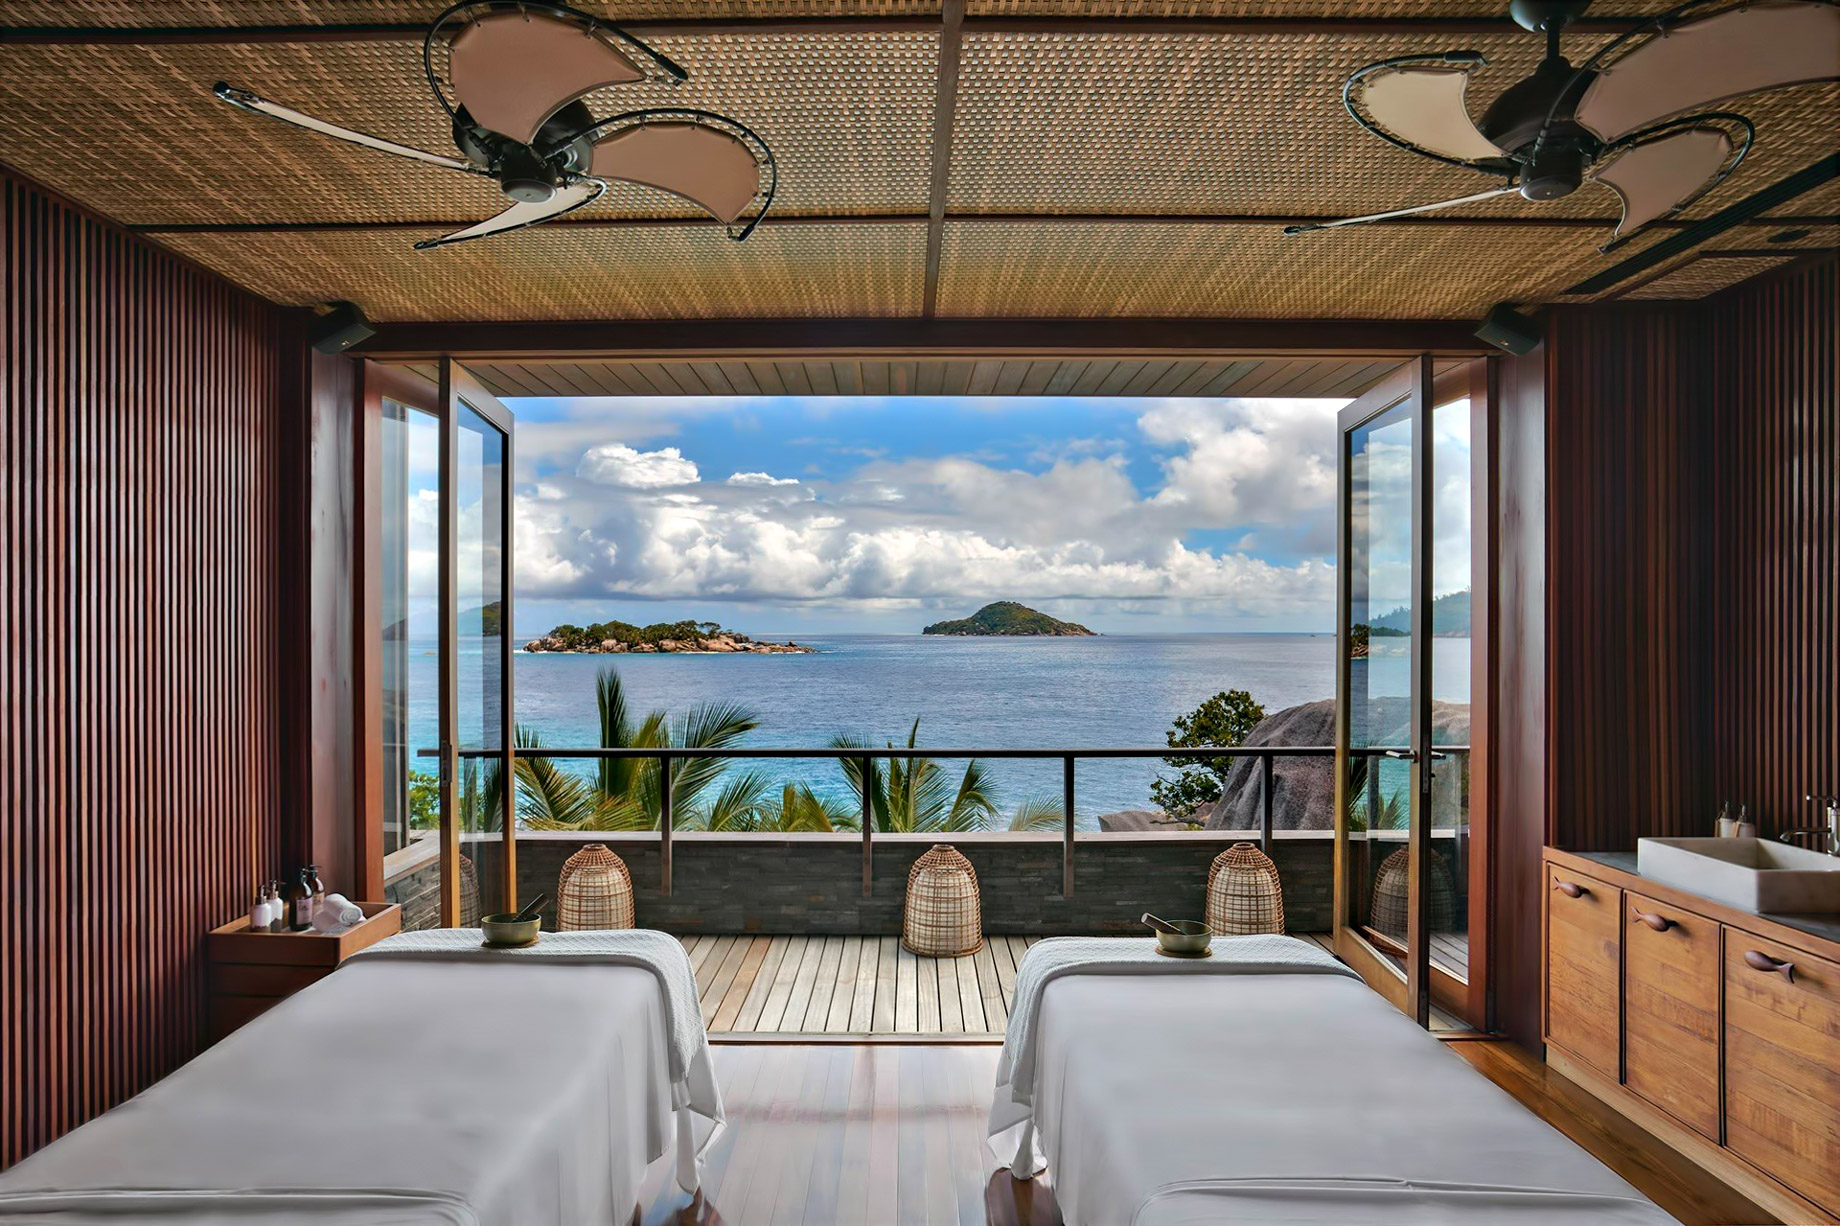 Six Senses Zil Pasyon Resort - Felicite Island, Seychelles - Spa Treatment Room